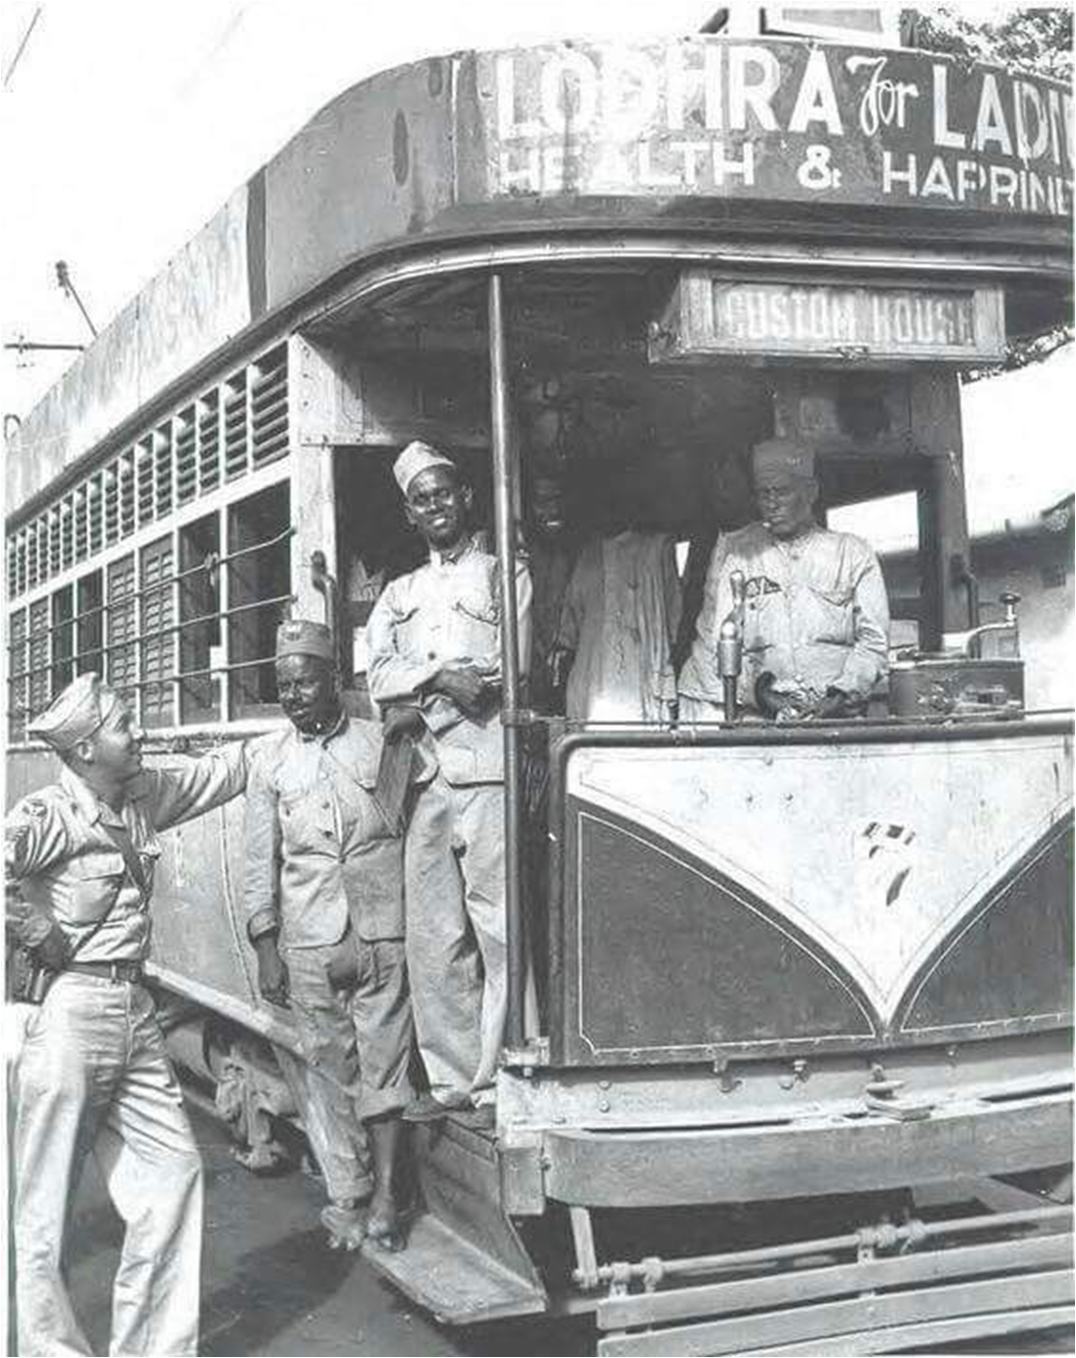 Madras Tram & Lodhra for Ladies